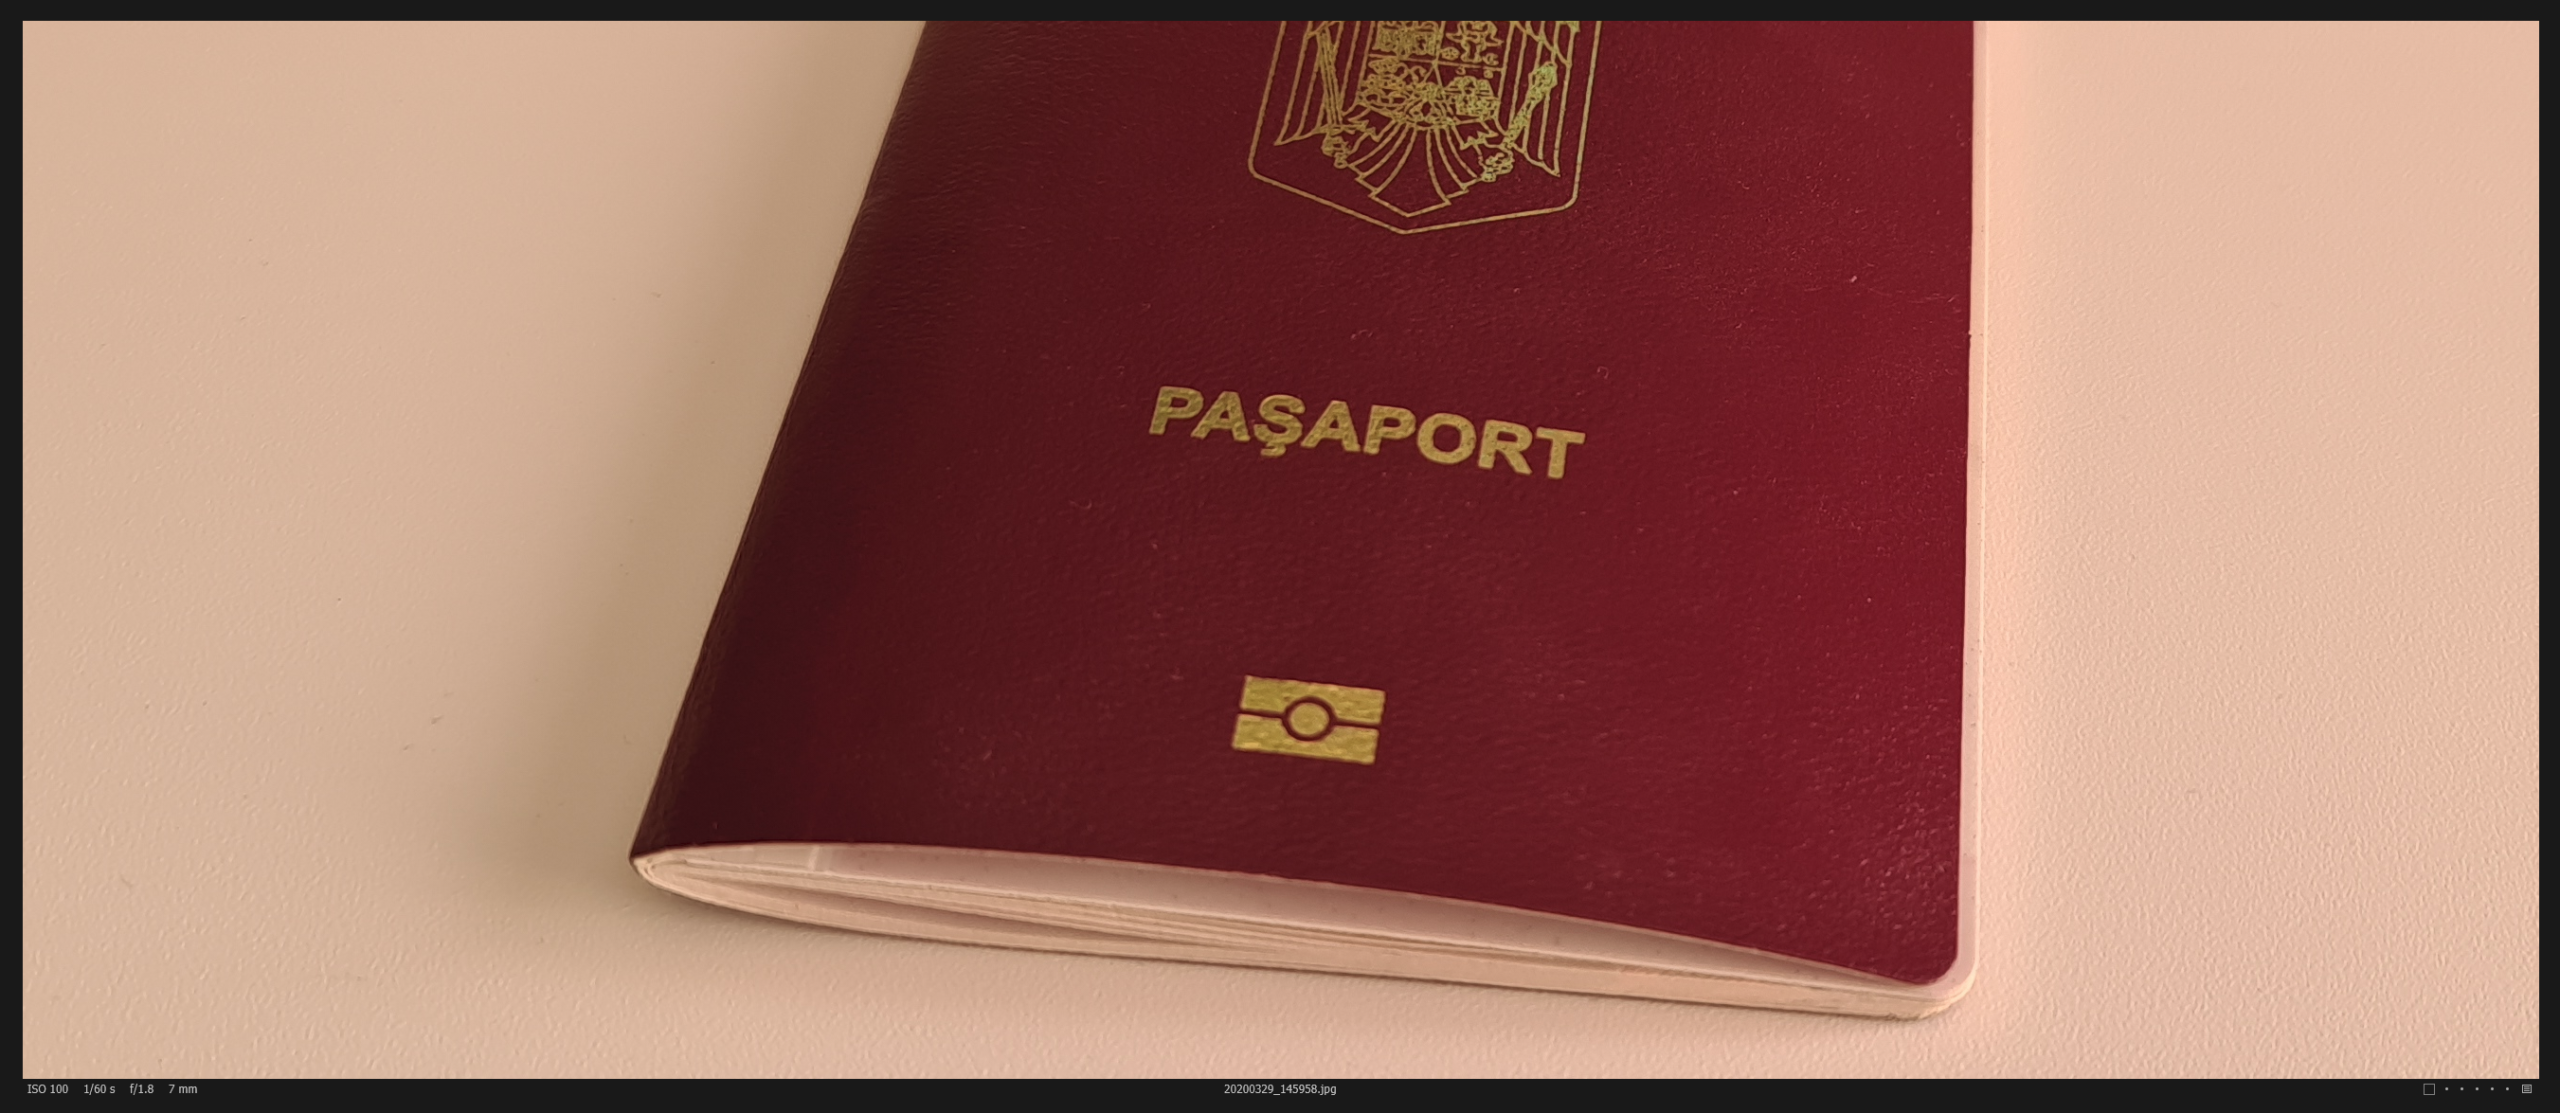 imagine pasaport s20